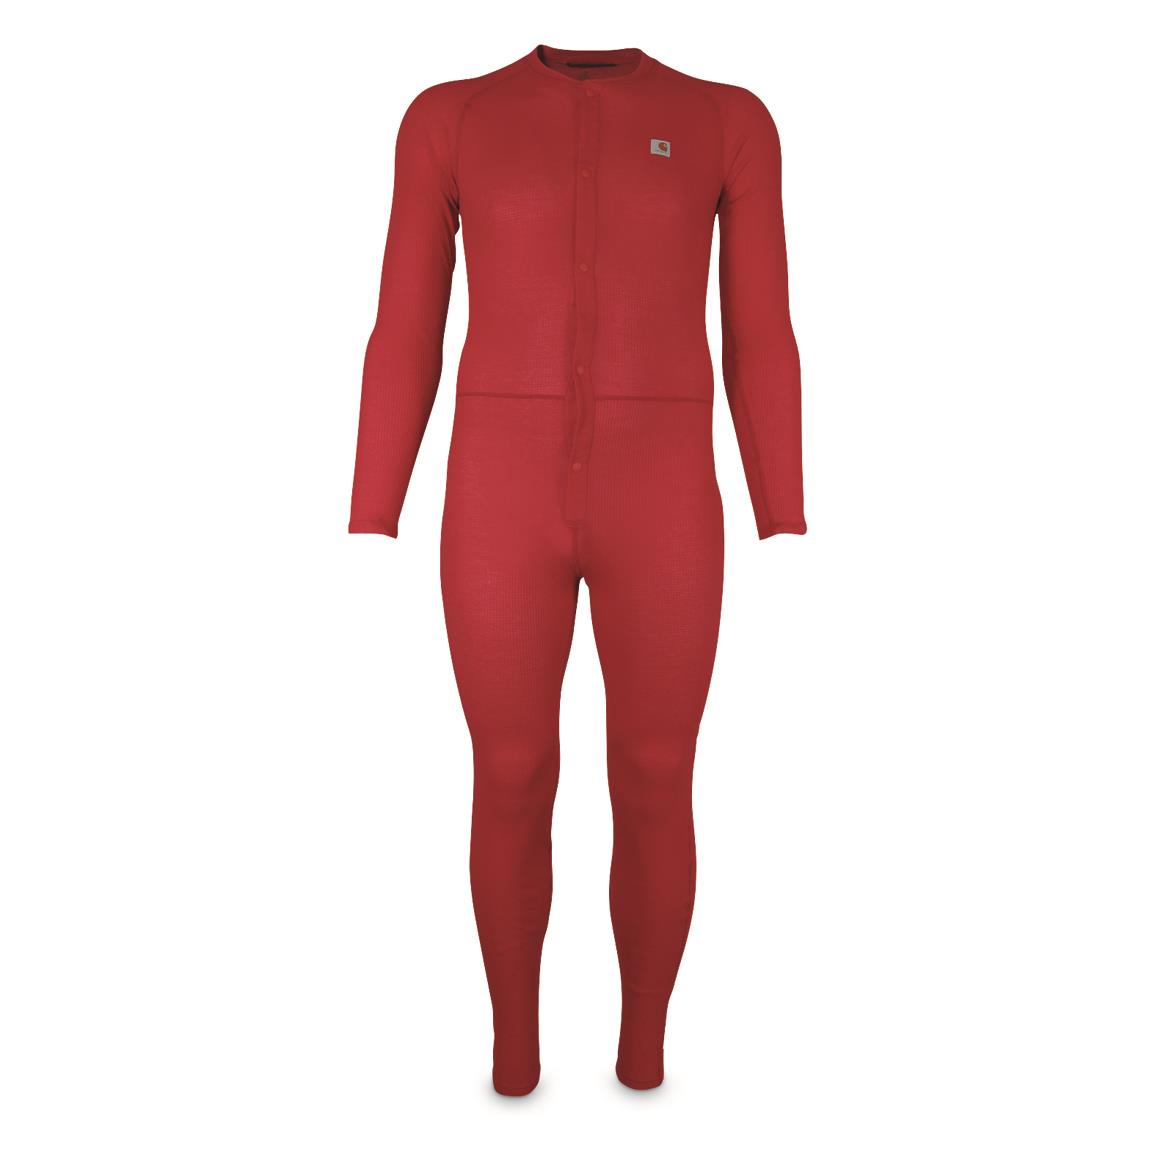 Carhartt Men's Classic Union Suit, Red